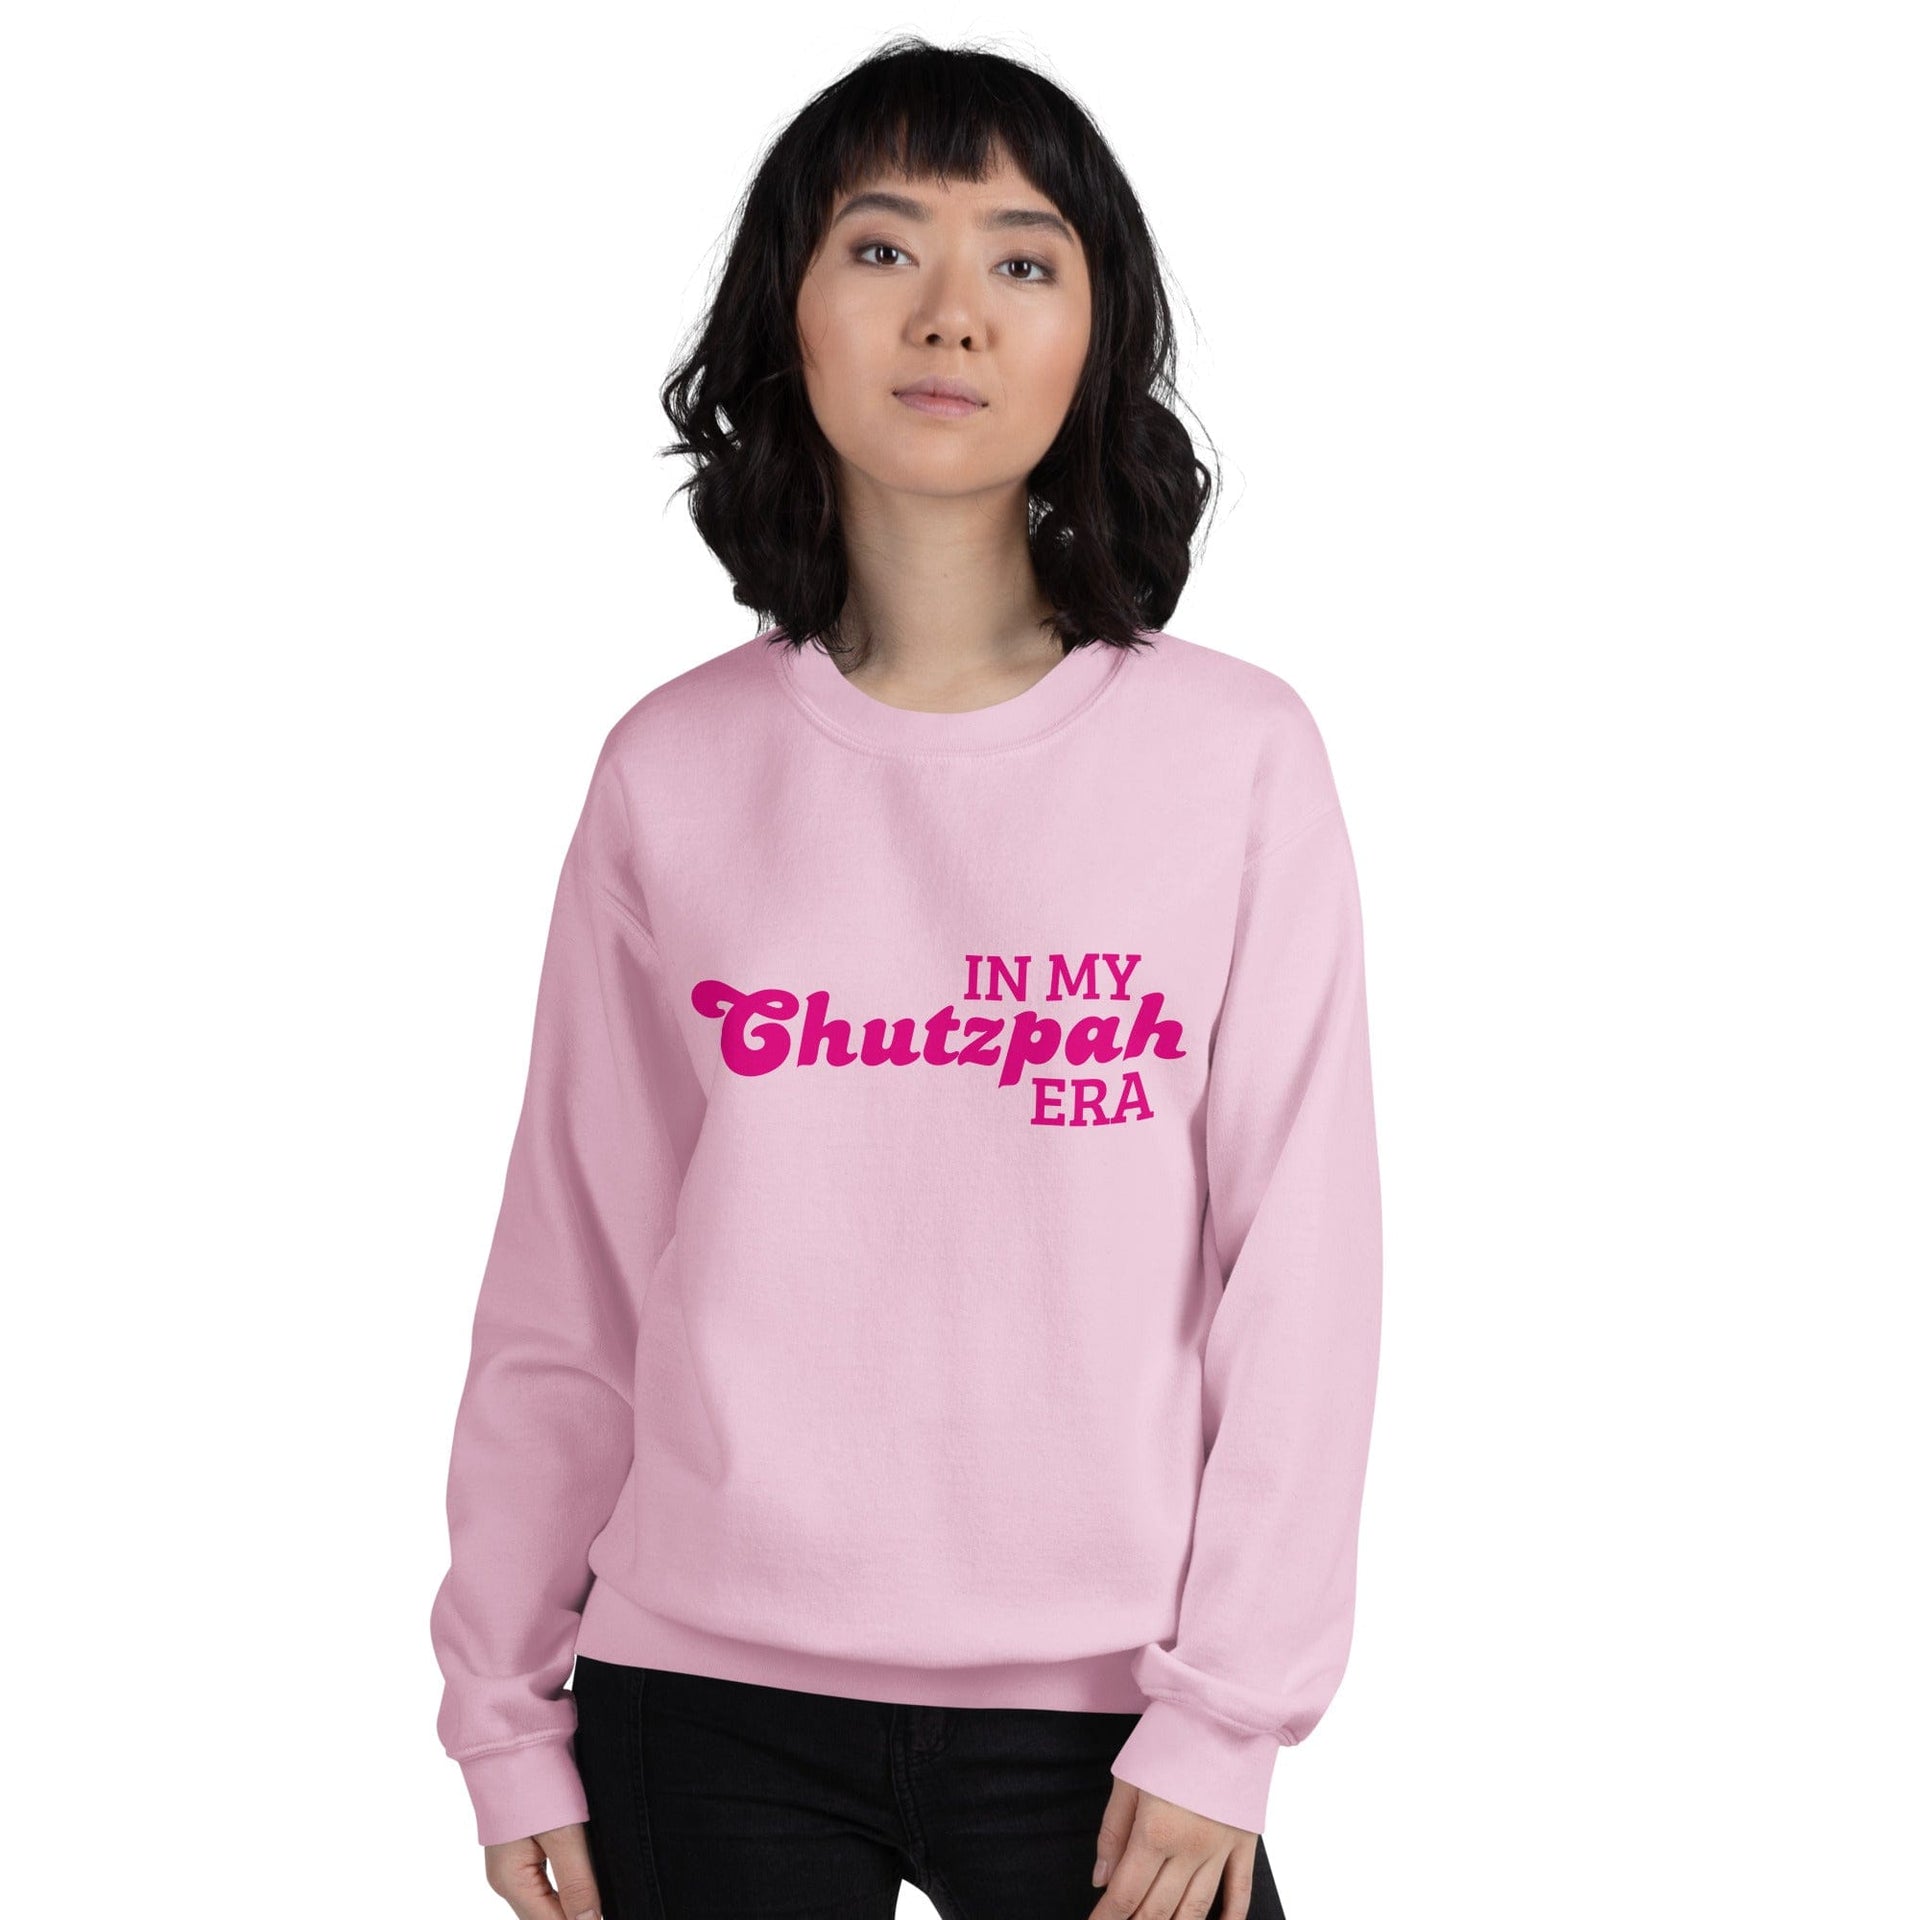 Chutzpah Embroidered Unisex T-Shirt - (Sizes S - 4XL)